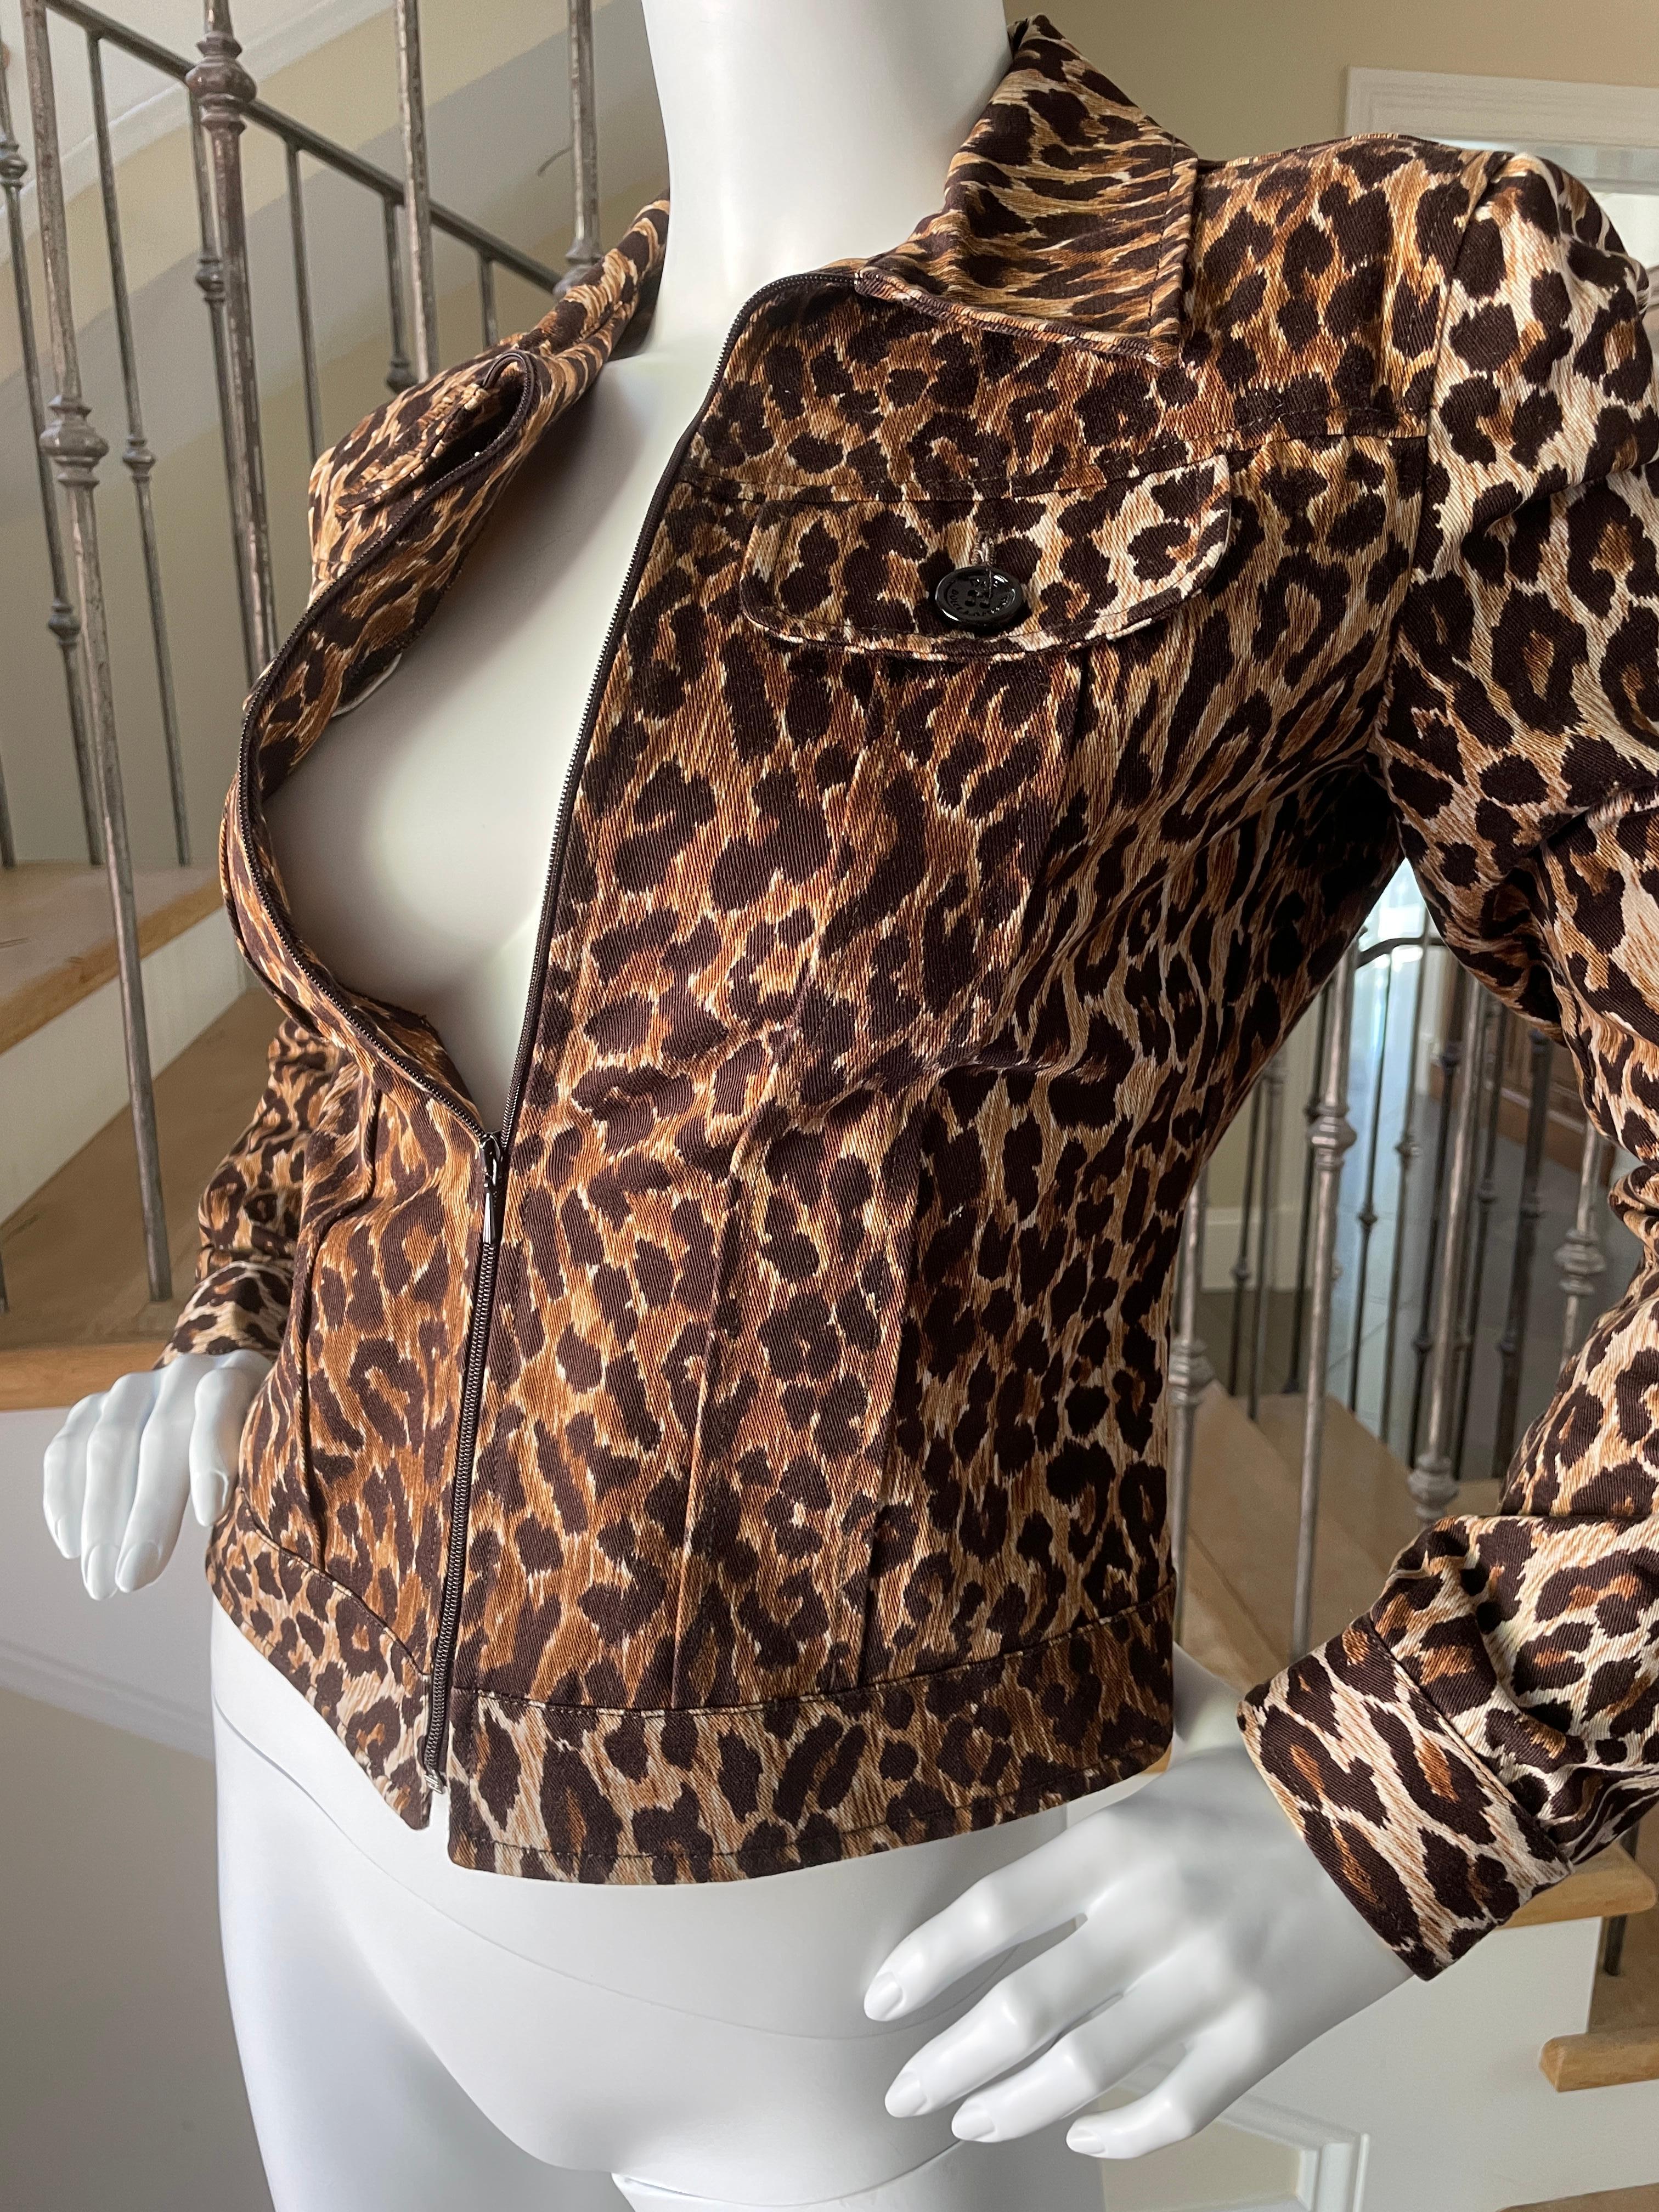 D&G Vintage Cropped Denim Leopard Print Zip Front Jacket by Dolce & Gabbana
No size tag, appx S
  Bust 36